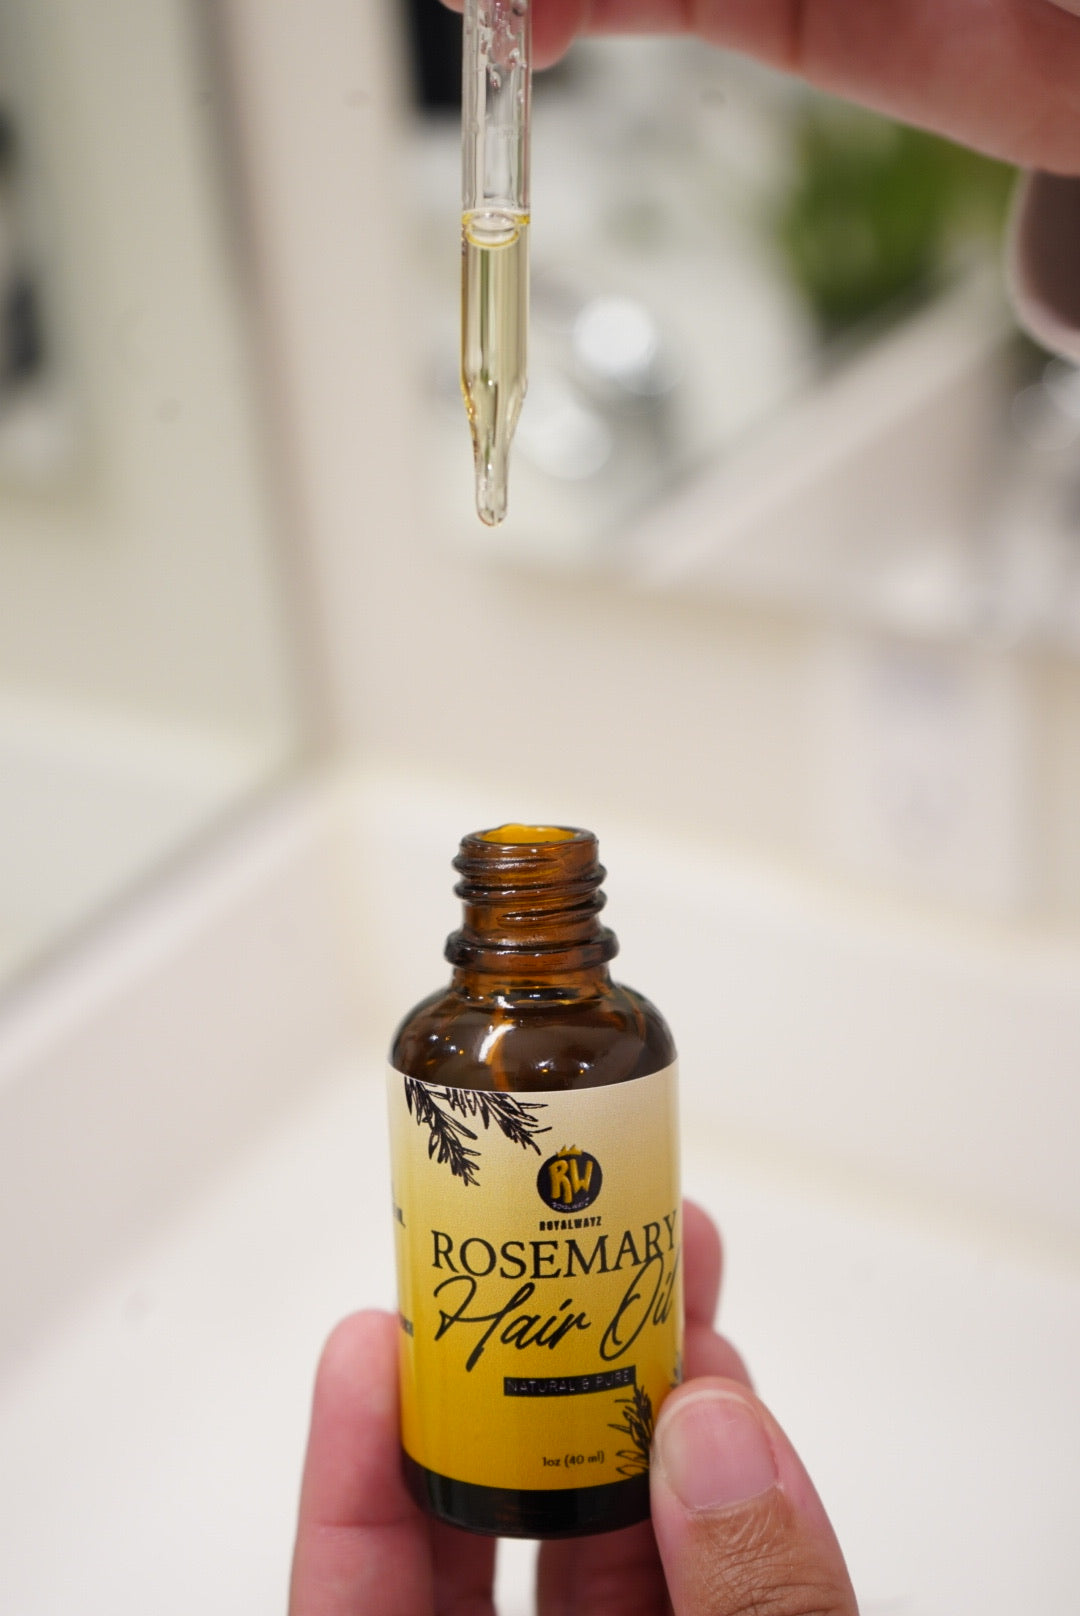 RoseMary Hair Oil